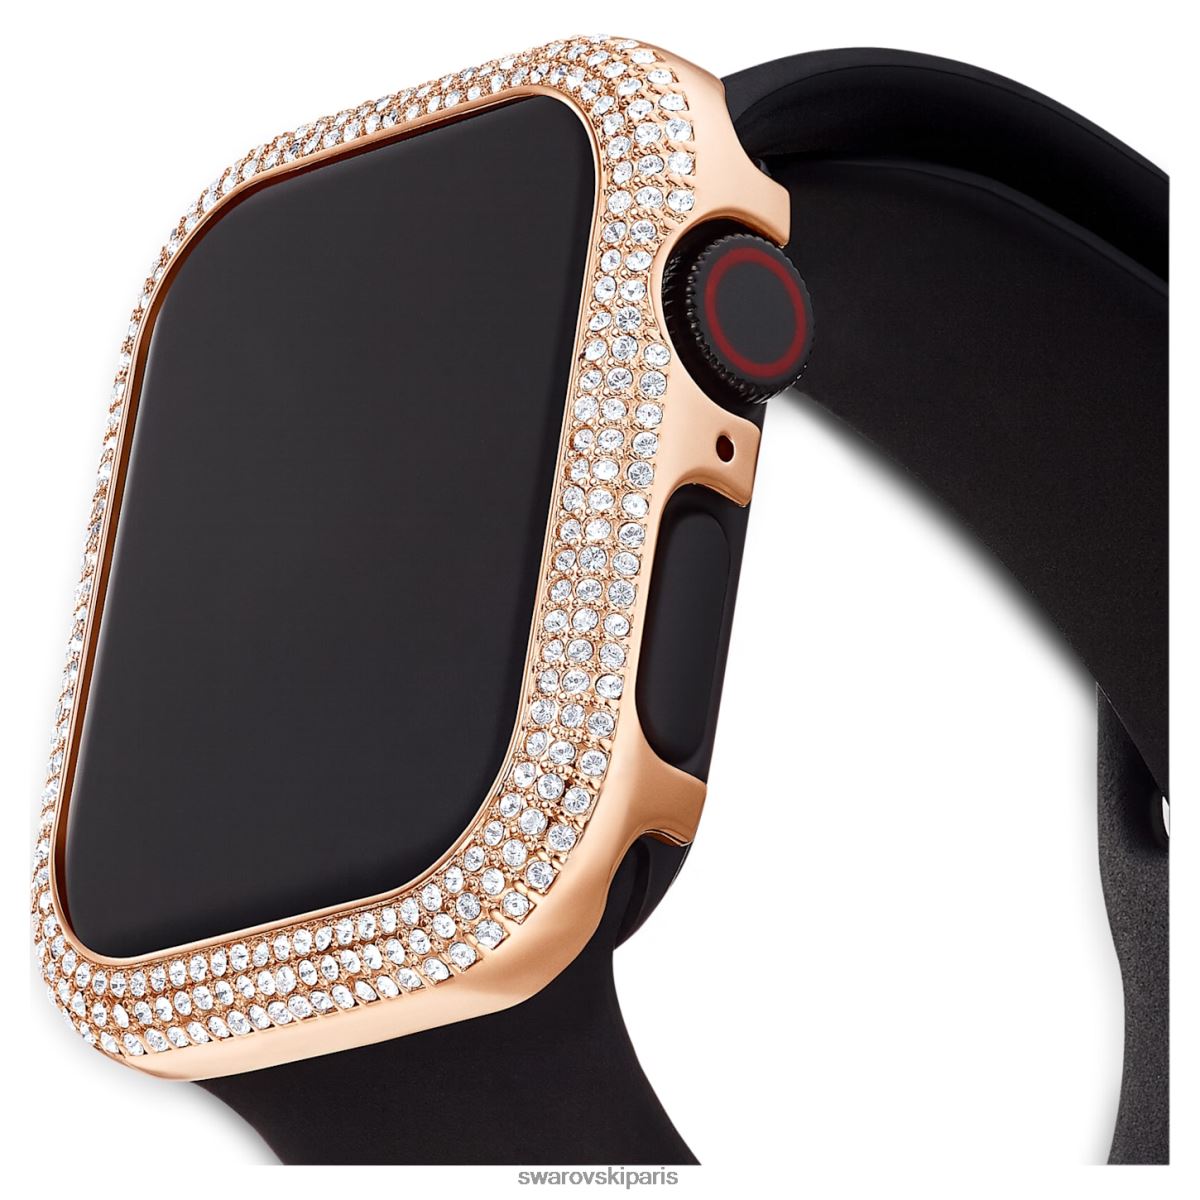 accessoires Swarovski coque scintillante compatible avec apple watch ton or rose RZD0XJ1418